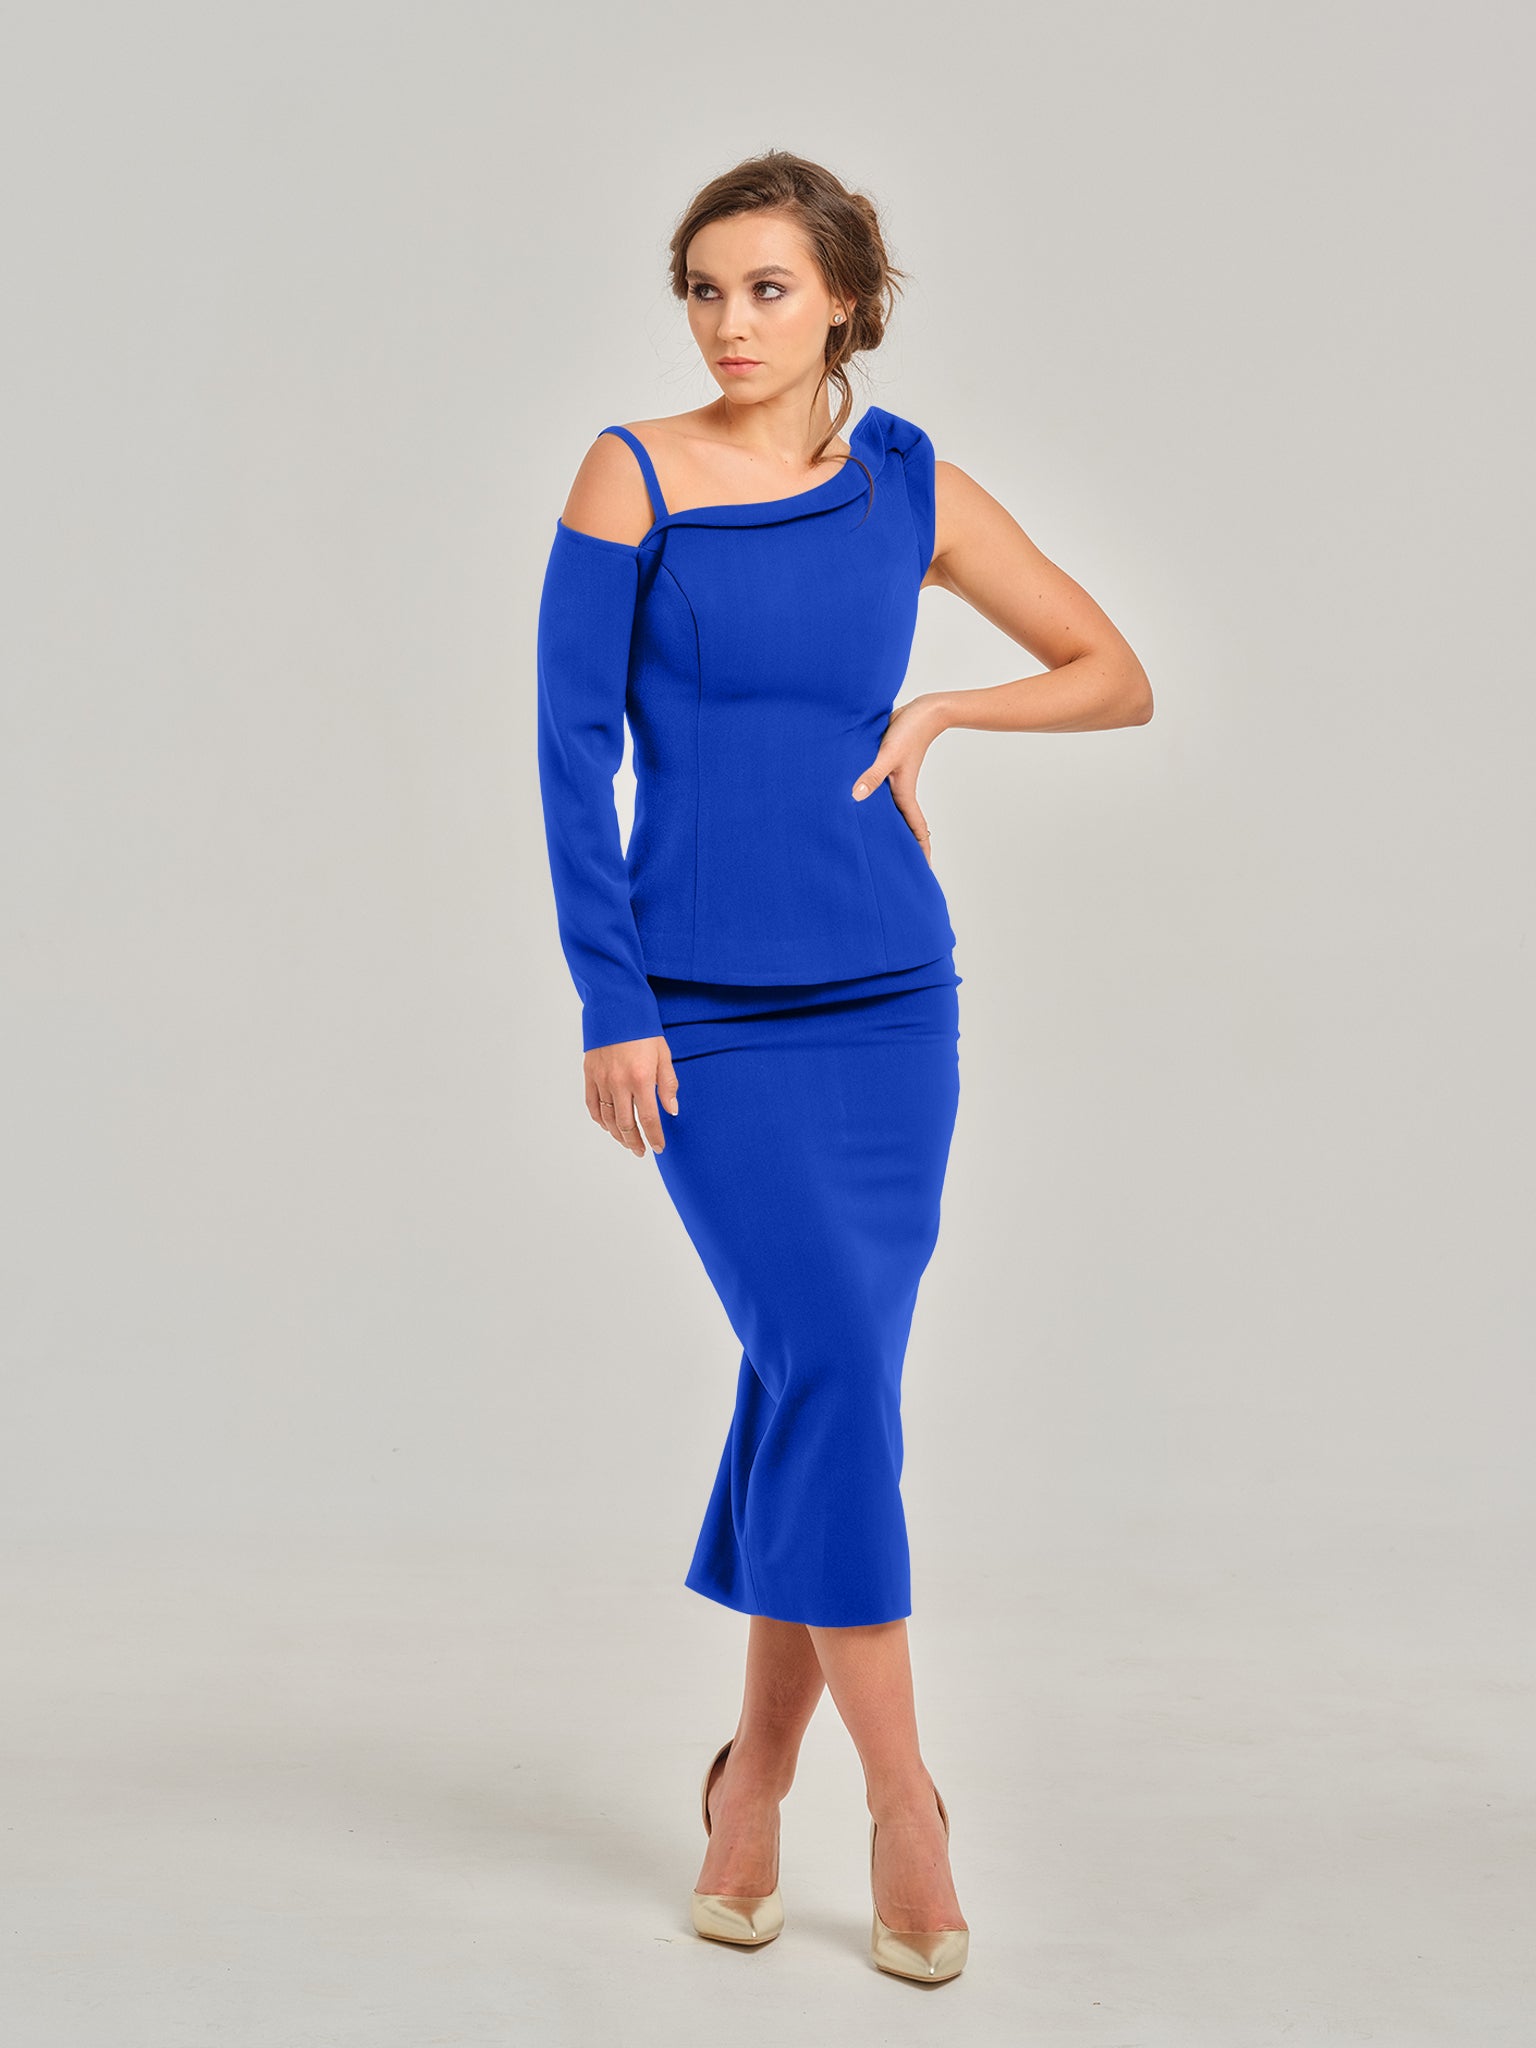 Royal Azure Asymmetric One-Shoulder Top by Tia Dorraine Women's Luxury Fashion Designer Clothing Brand